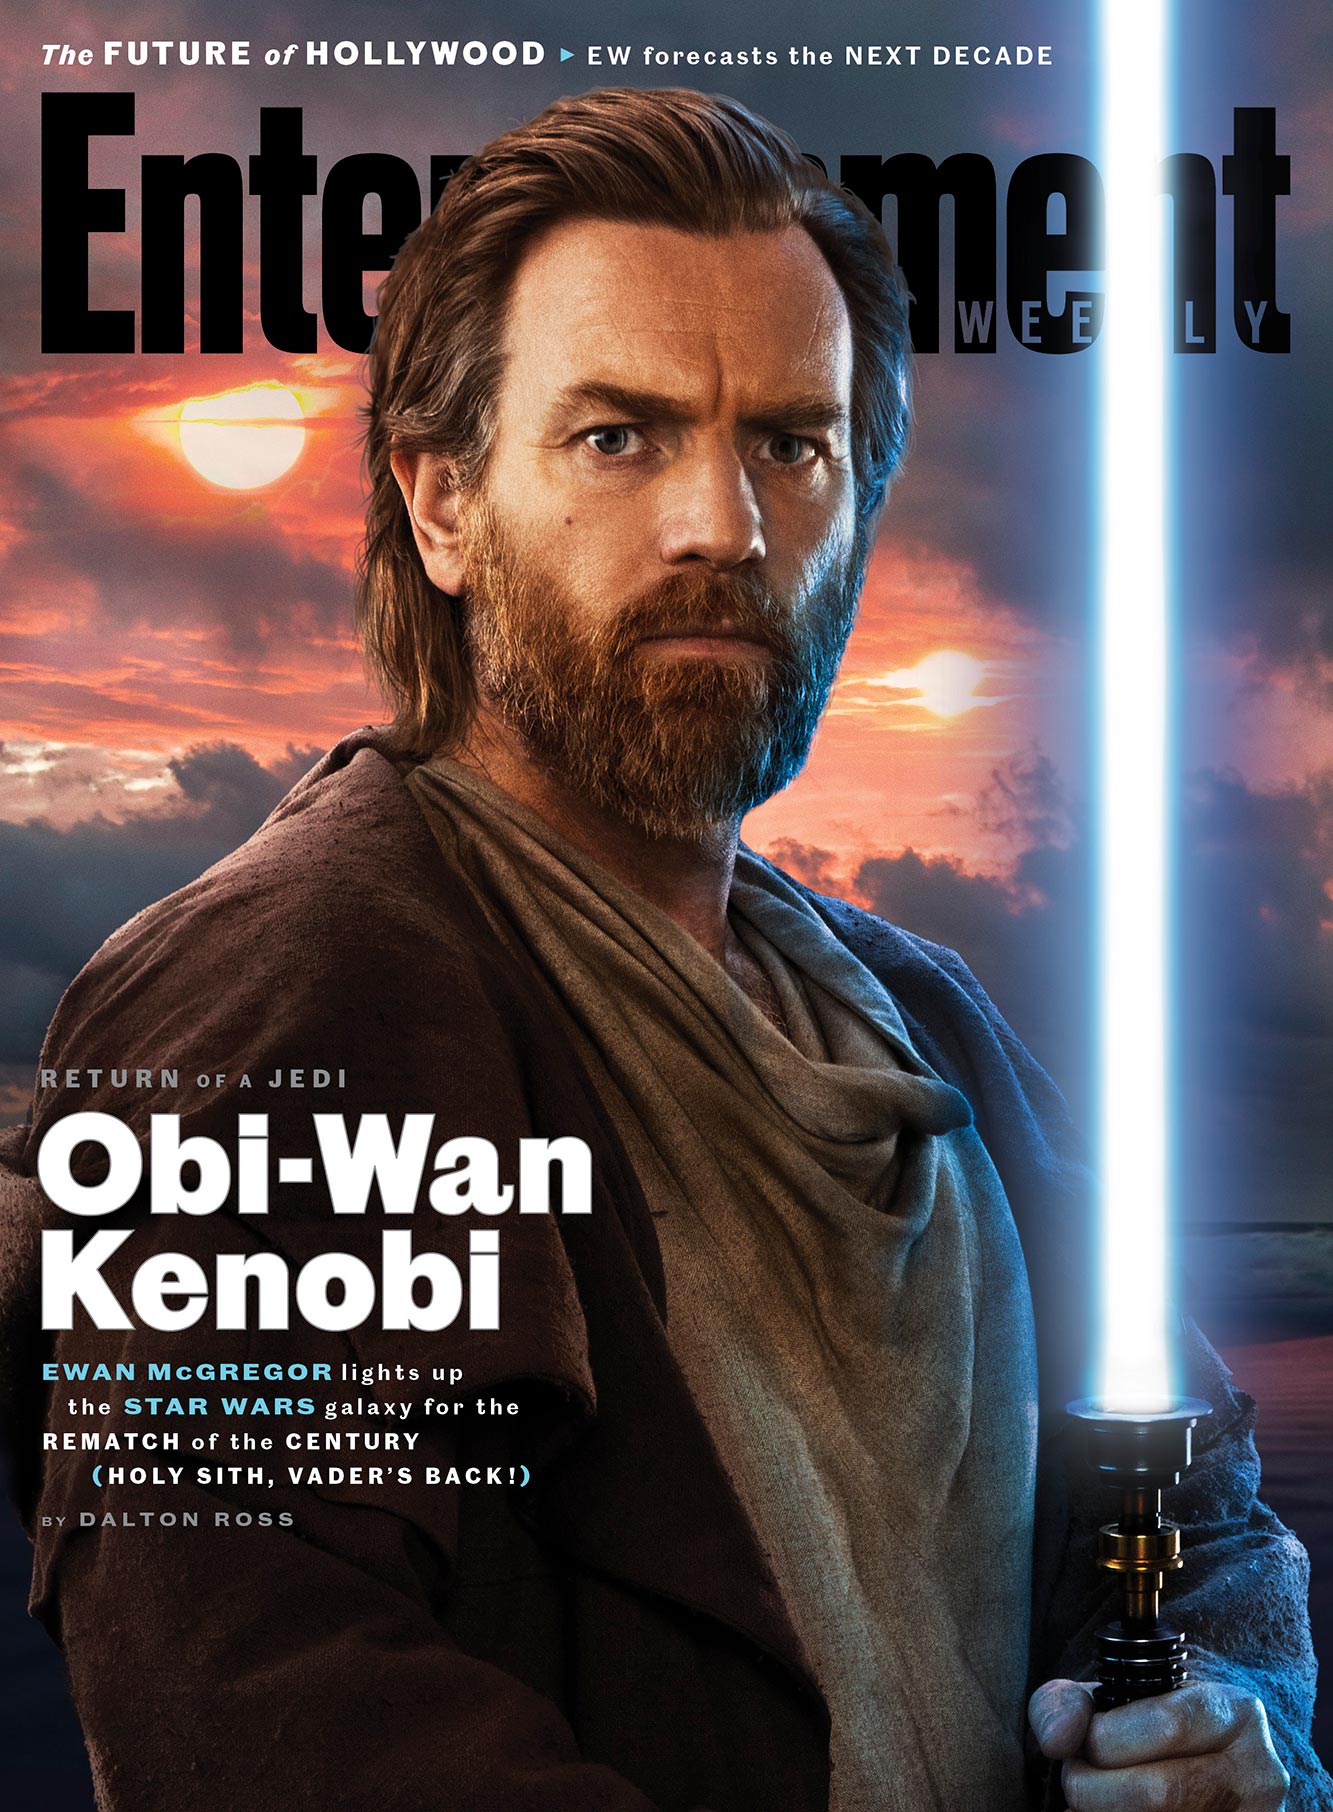 Portada de la revista Entertainment Weekly dedicada a la serie Obi-Wan Kenobi